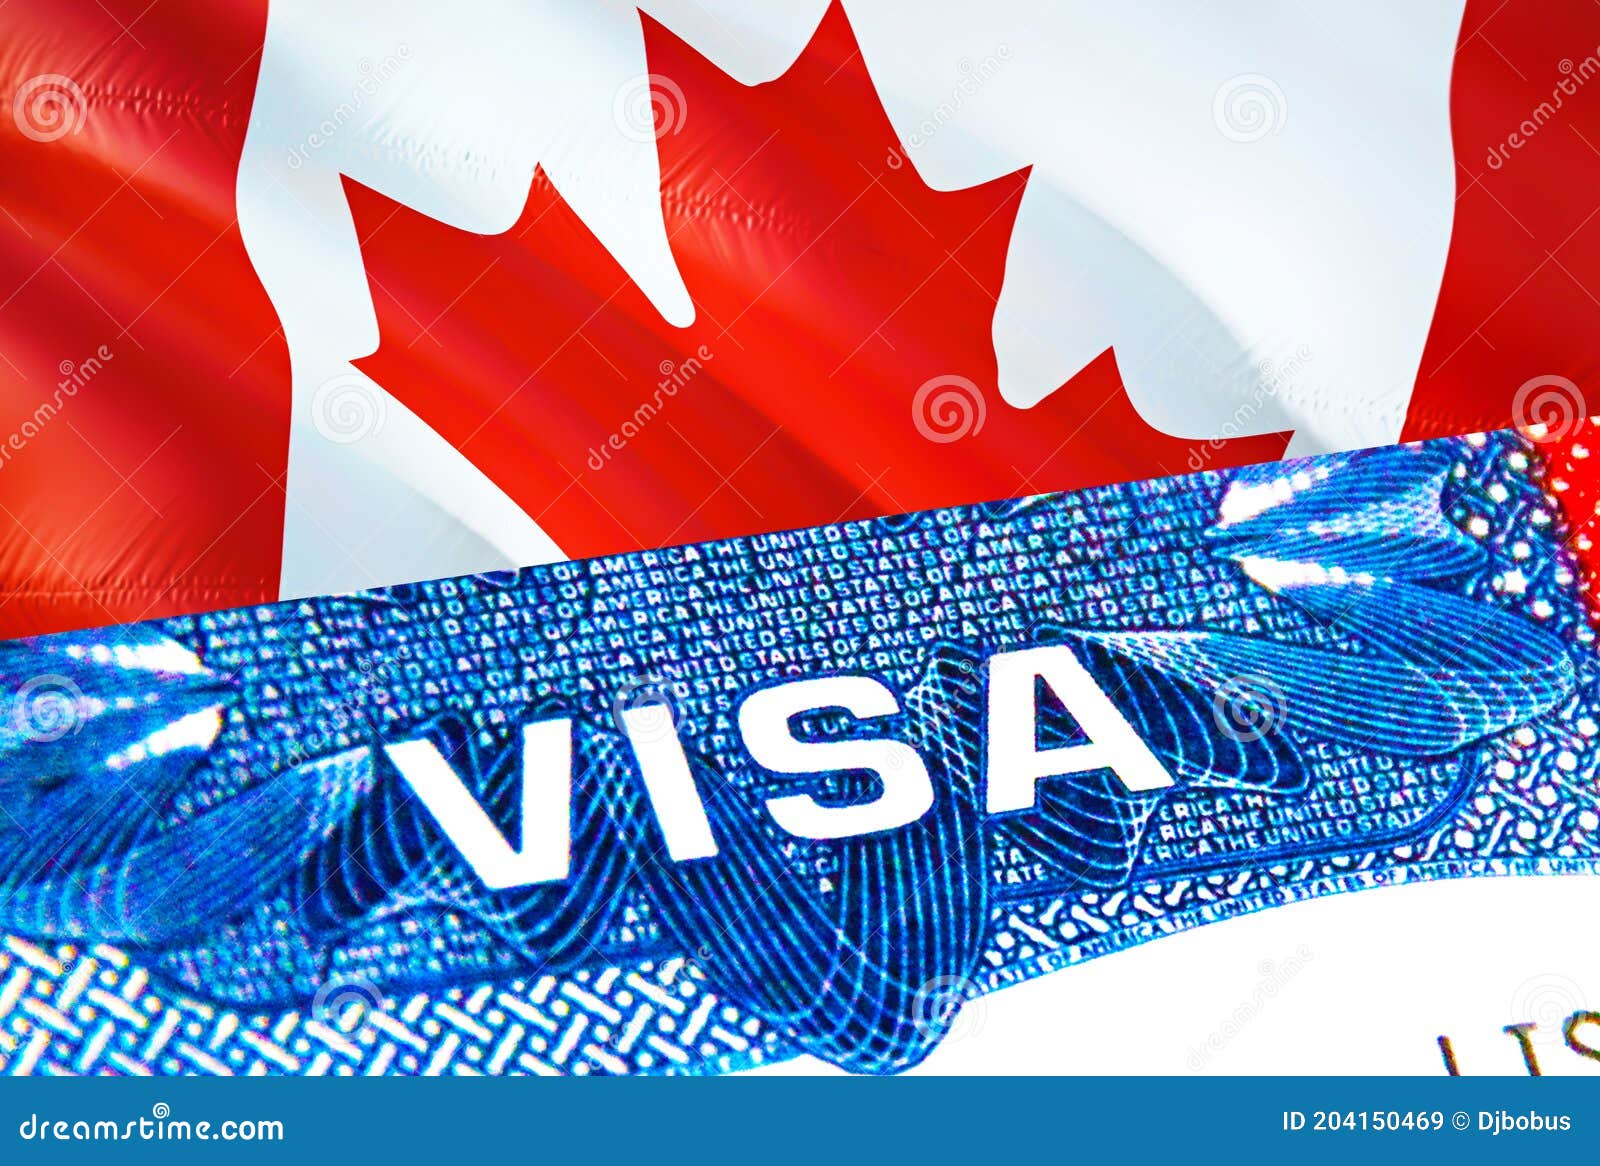 667 canada visa photos free royalty free stock photos from dreamstime